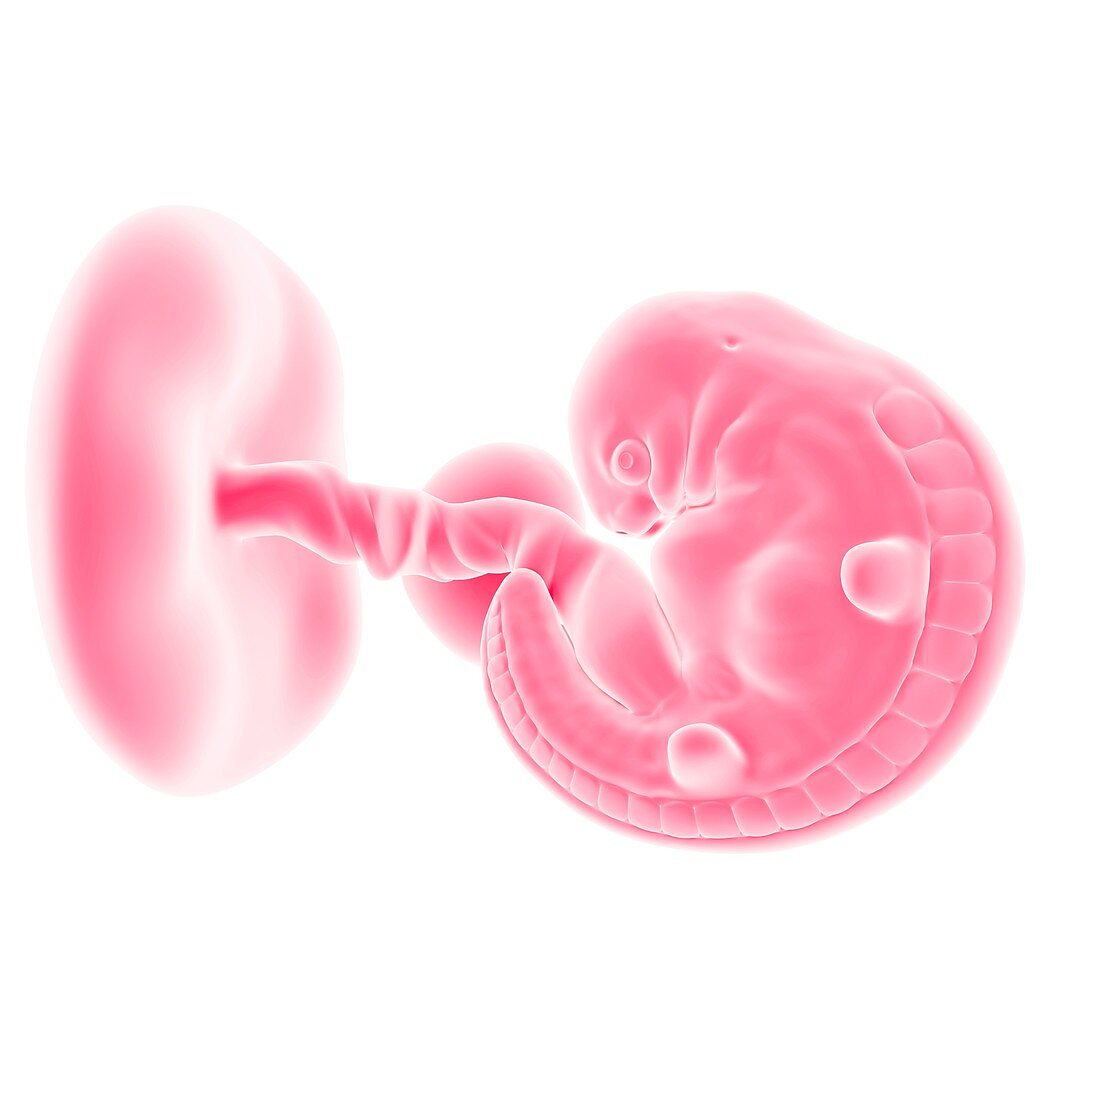 Human fetus age 6 weeks